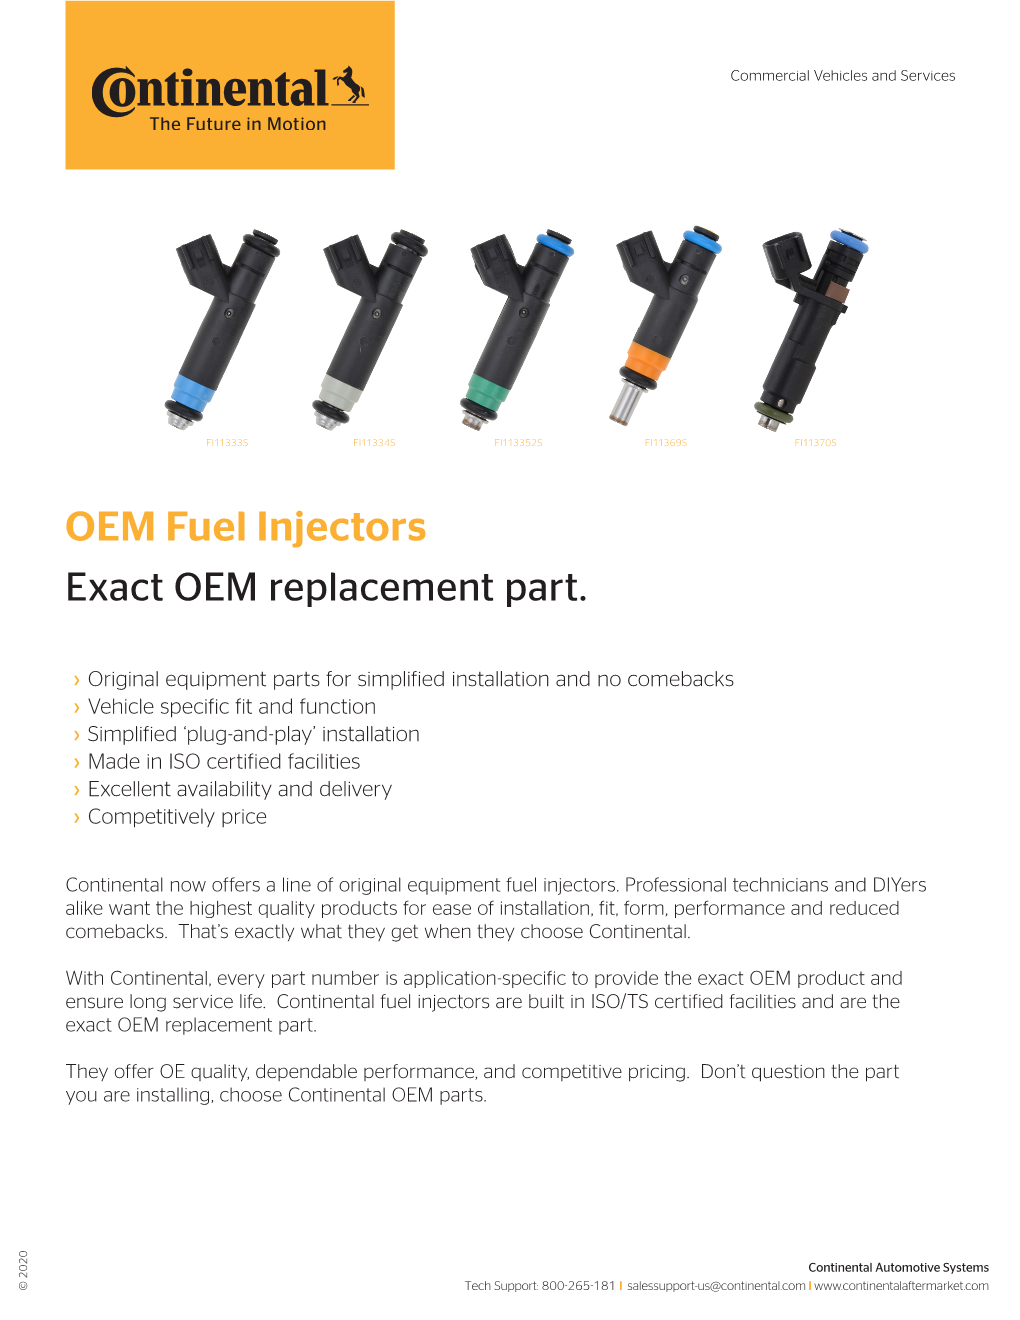 OEM Fuel Injectors Exact OEM Replacement Part